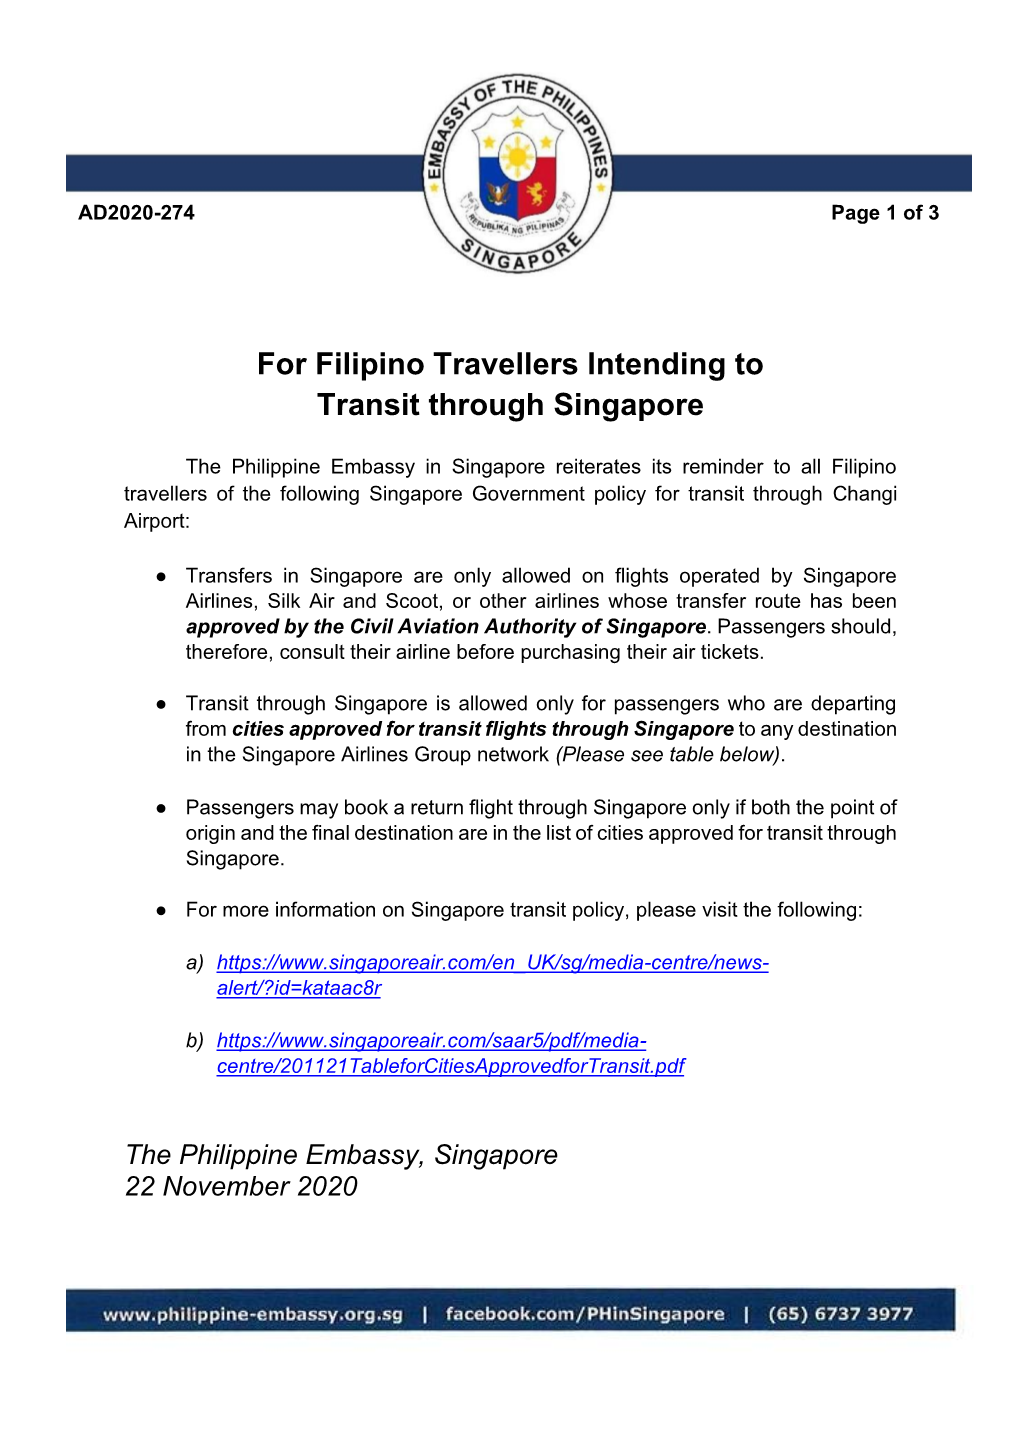 For Filipino Travellers Intending to Transit Through Singapore